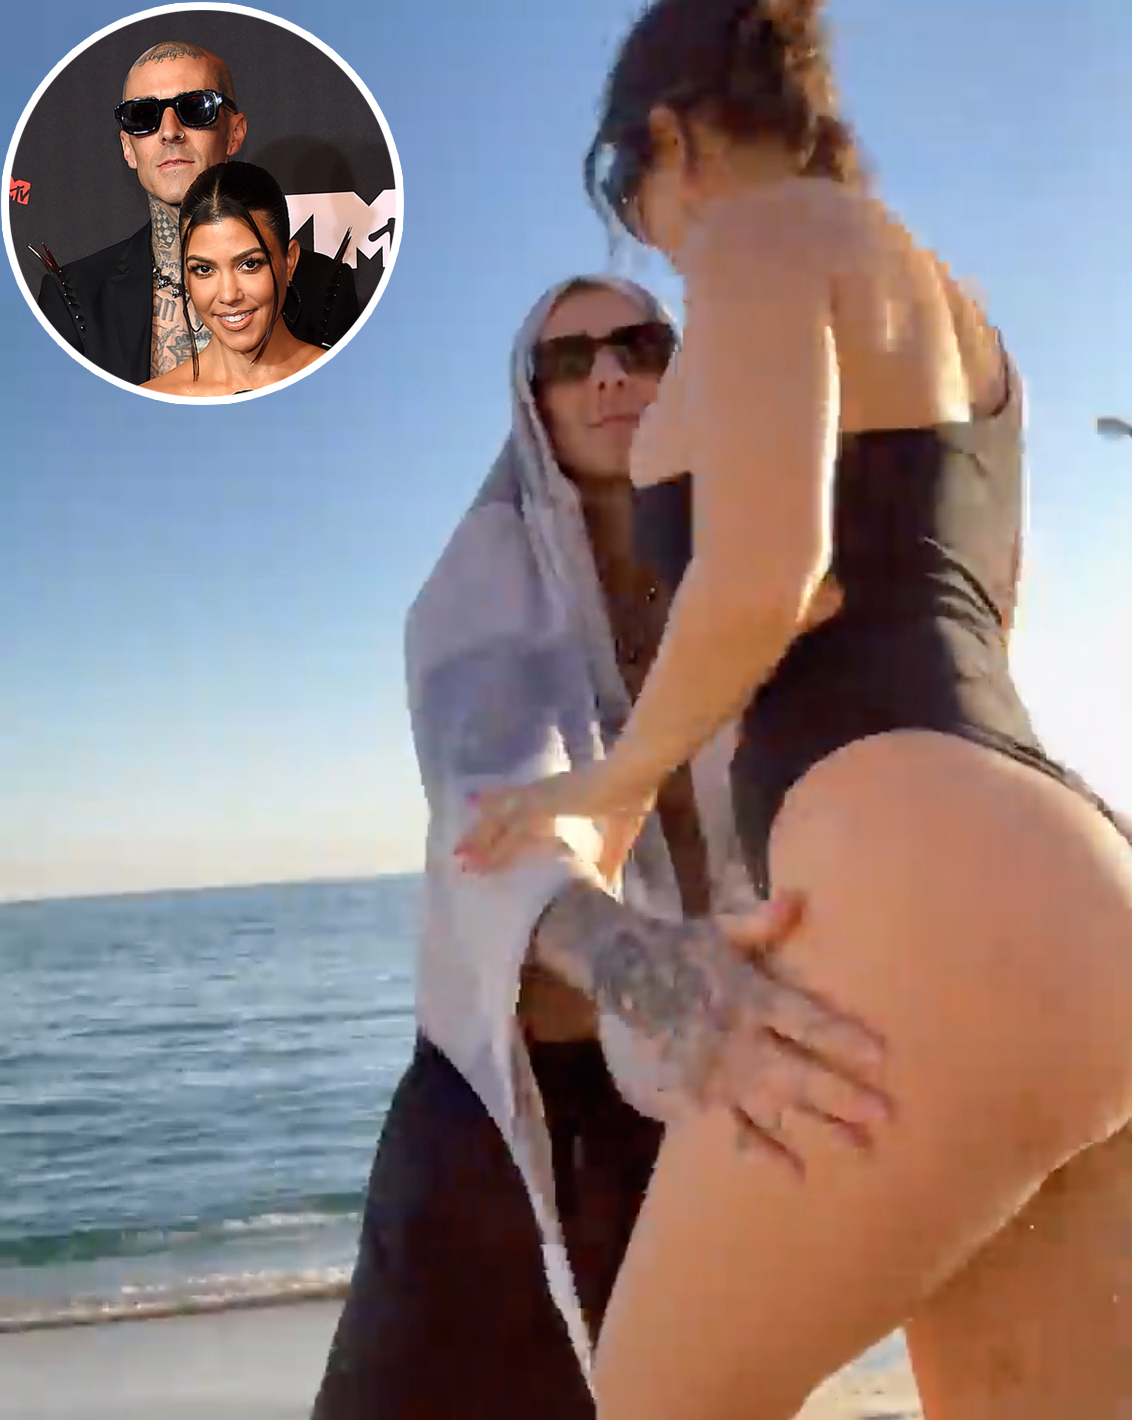 Naked Kim Kardashian At Beach - Travis Barker Holds Kourtney Kardashian's Bare Butt in NSFW Video